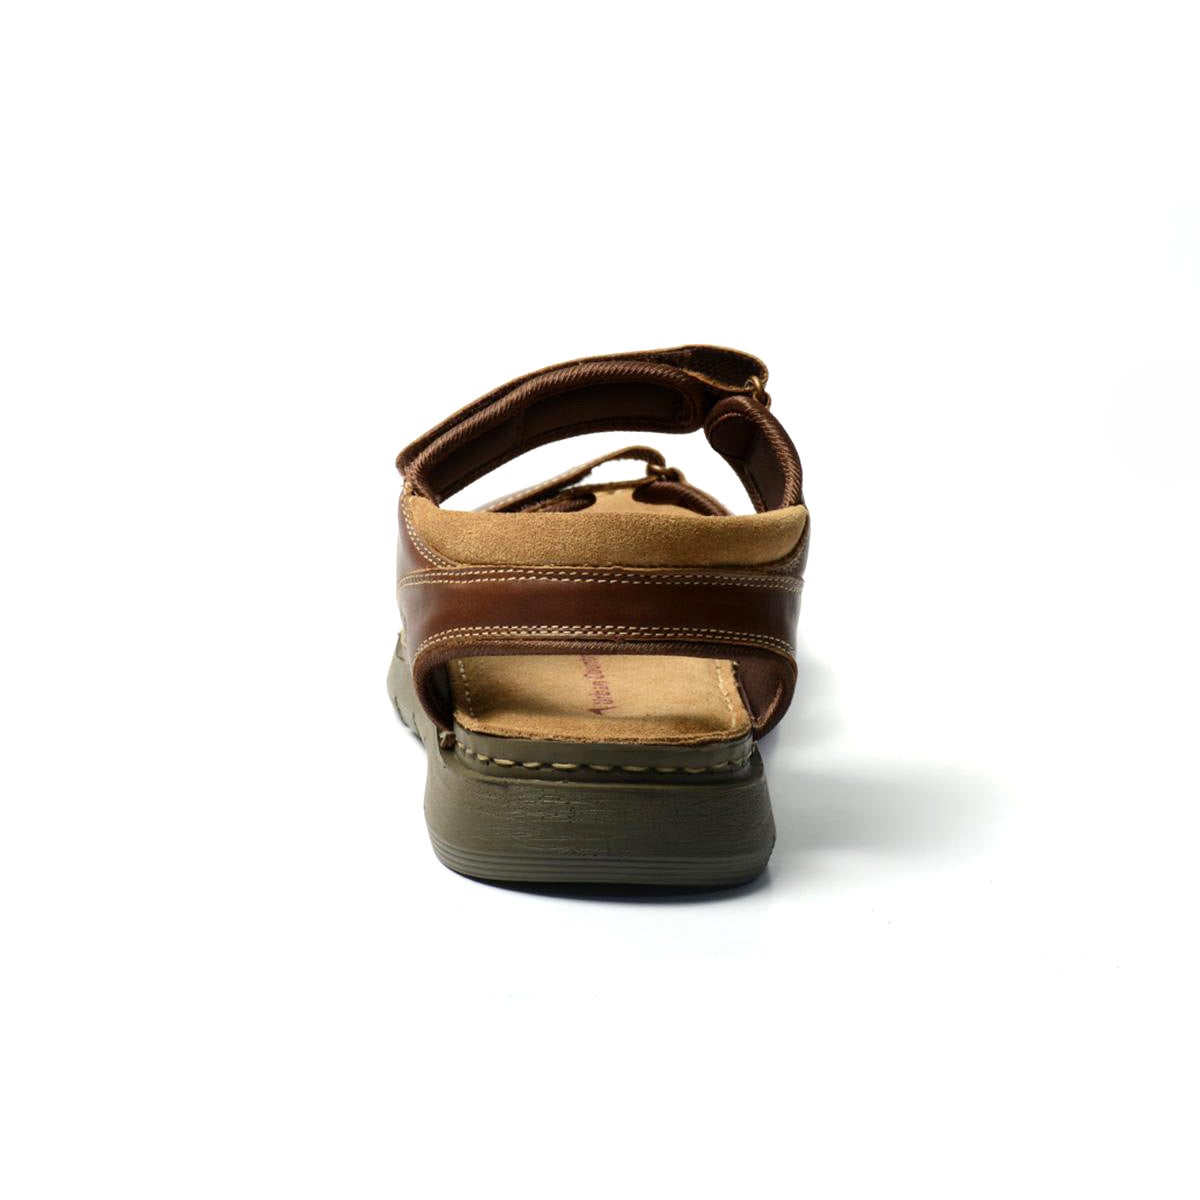 Men suede Leather Casual Sandals ǀ BORA 6074